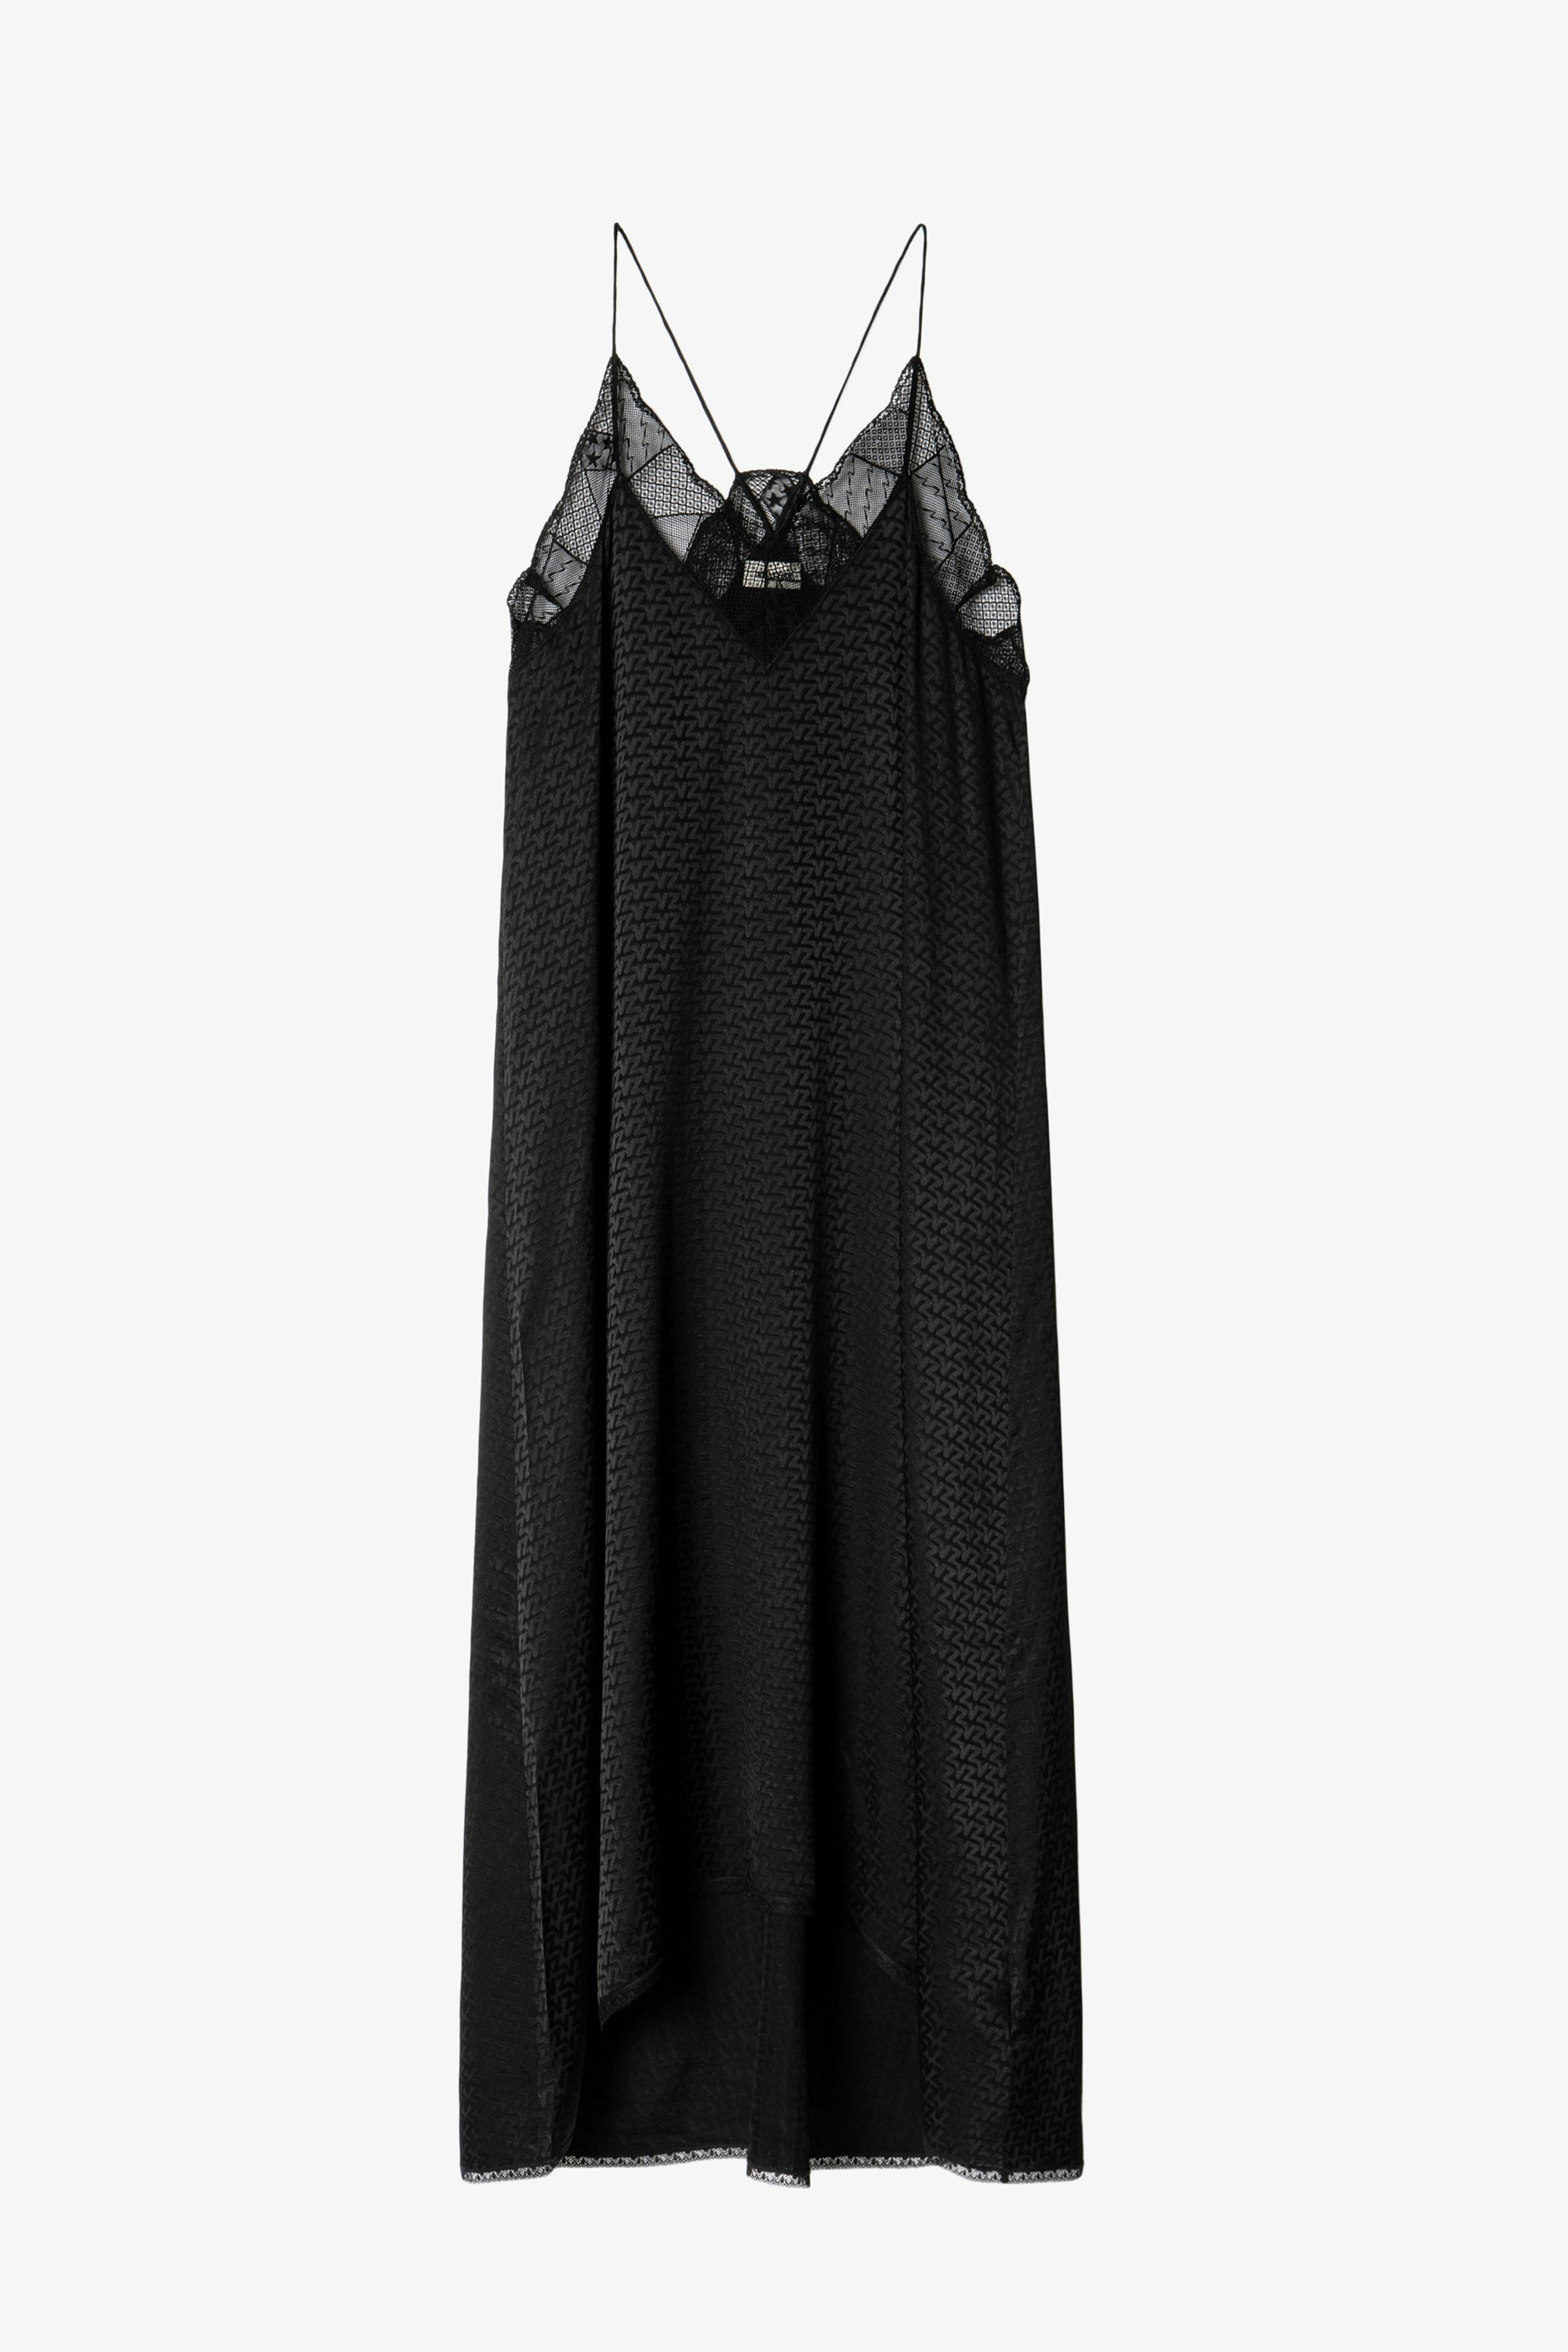 Robe Risty Jac ZV Soie - Robe longue en soie noire.